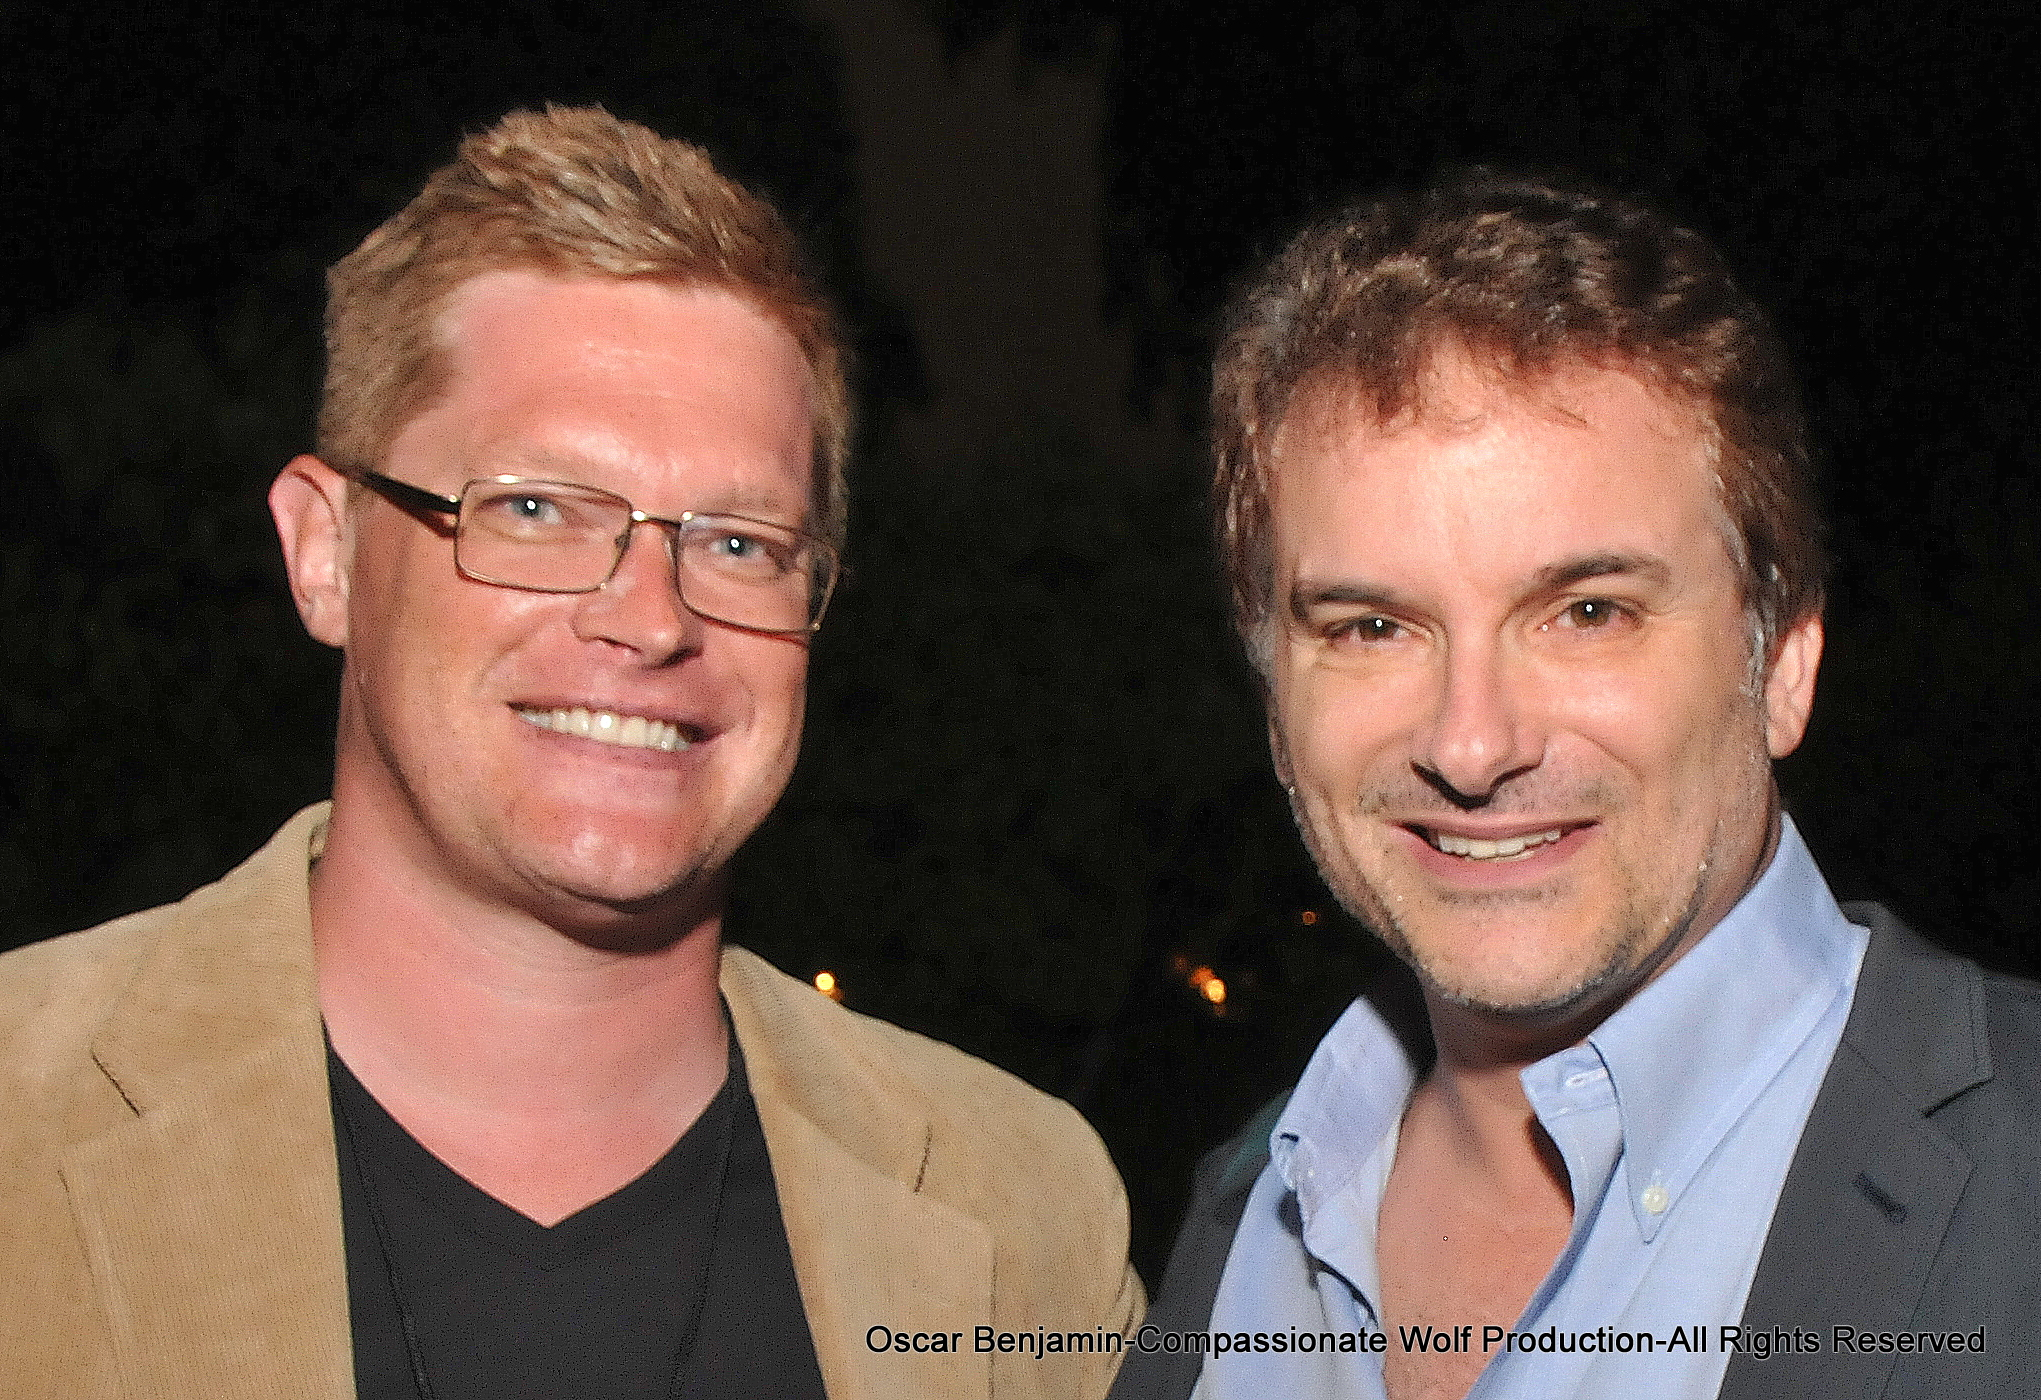 Erik von Wodtke and Shane Black at the 2014 Saturn Awards.